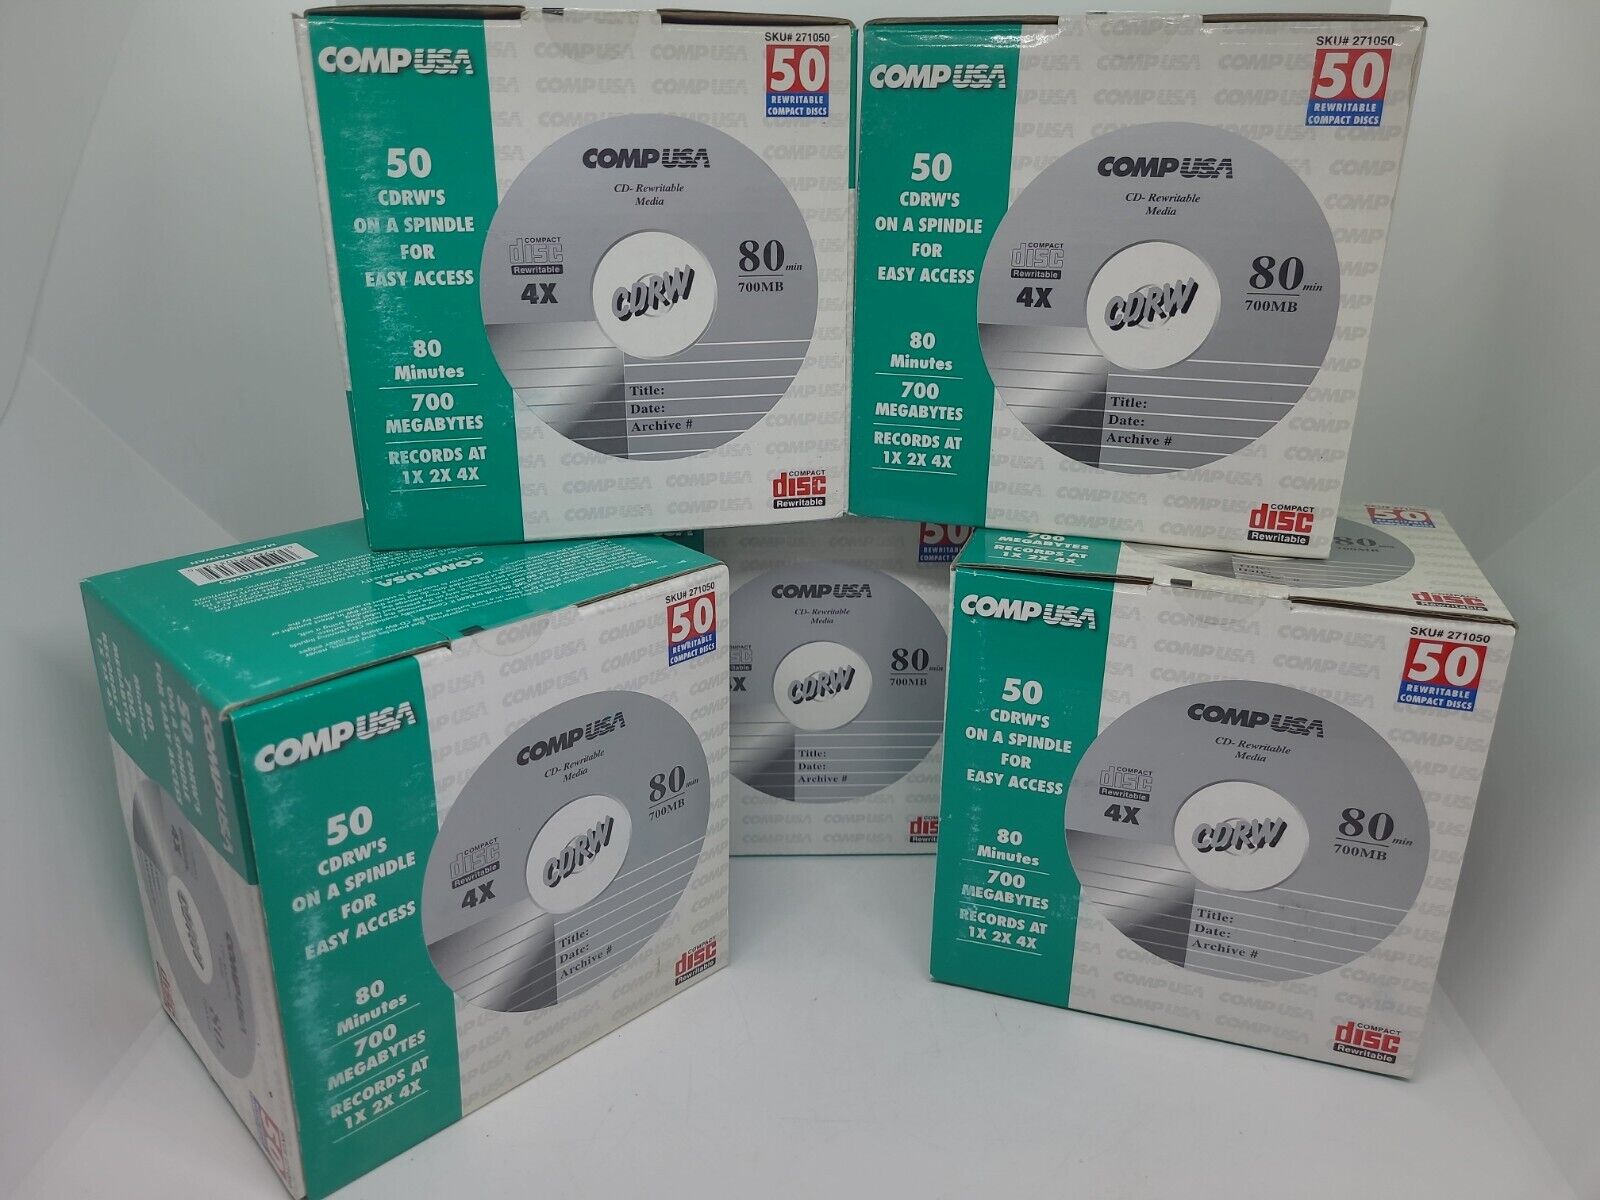 5-Comp USA 50 CD-RW Premium 4X80 Minute 700 Meg CD Rom Discs New Box 250 Total